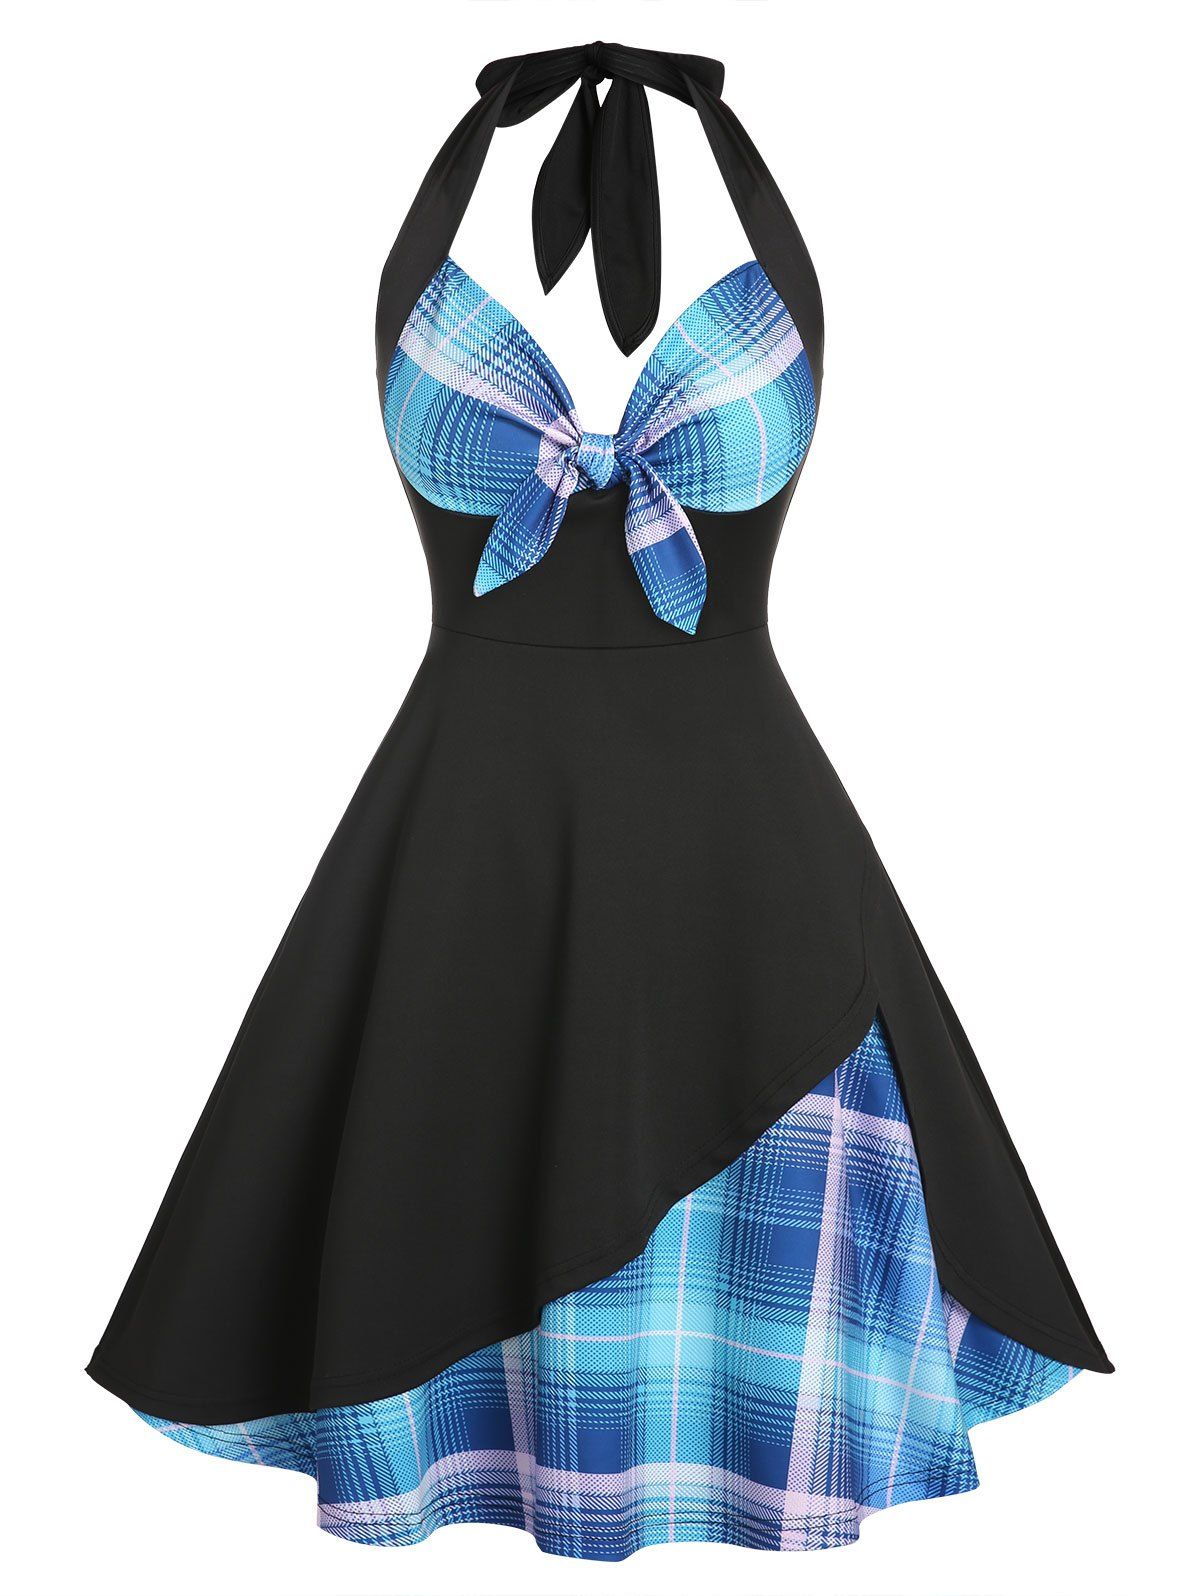 Plaid Print Halter Dress Knotted Corset Style A Line Dress Backless Sleeveless Vintage Dress - BLACK XL